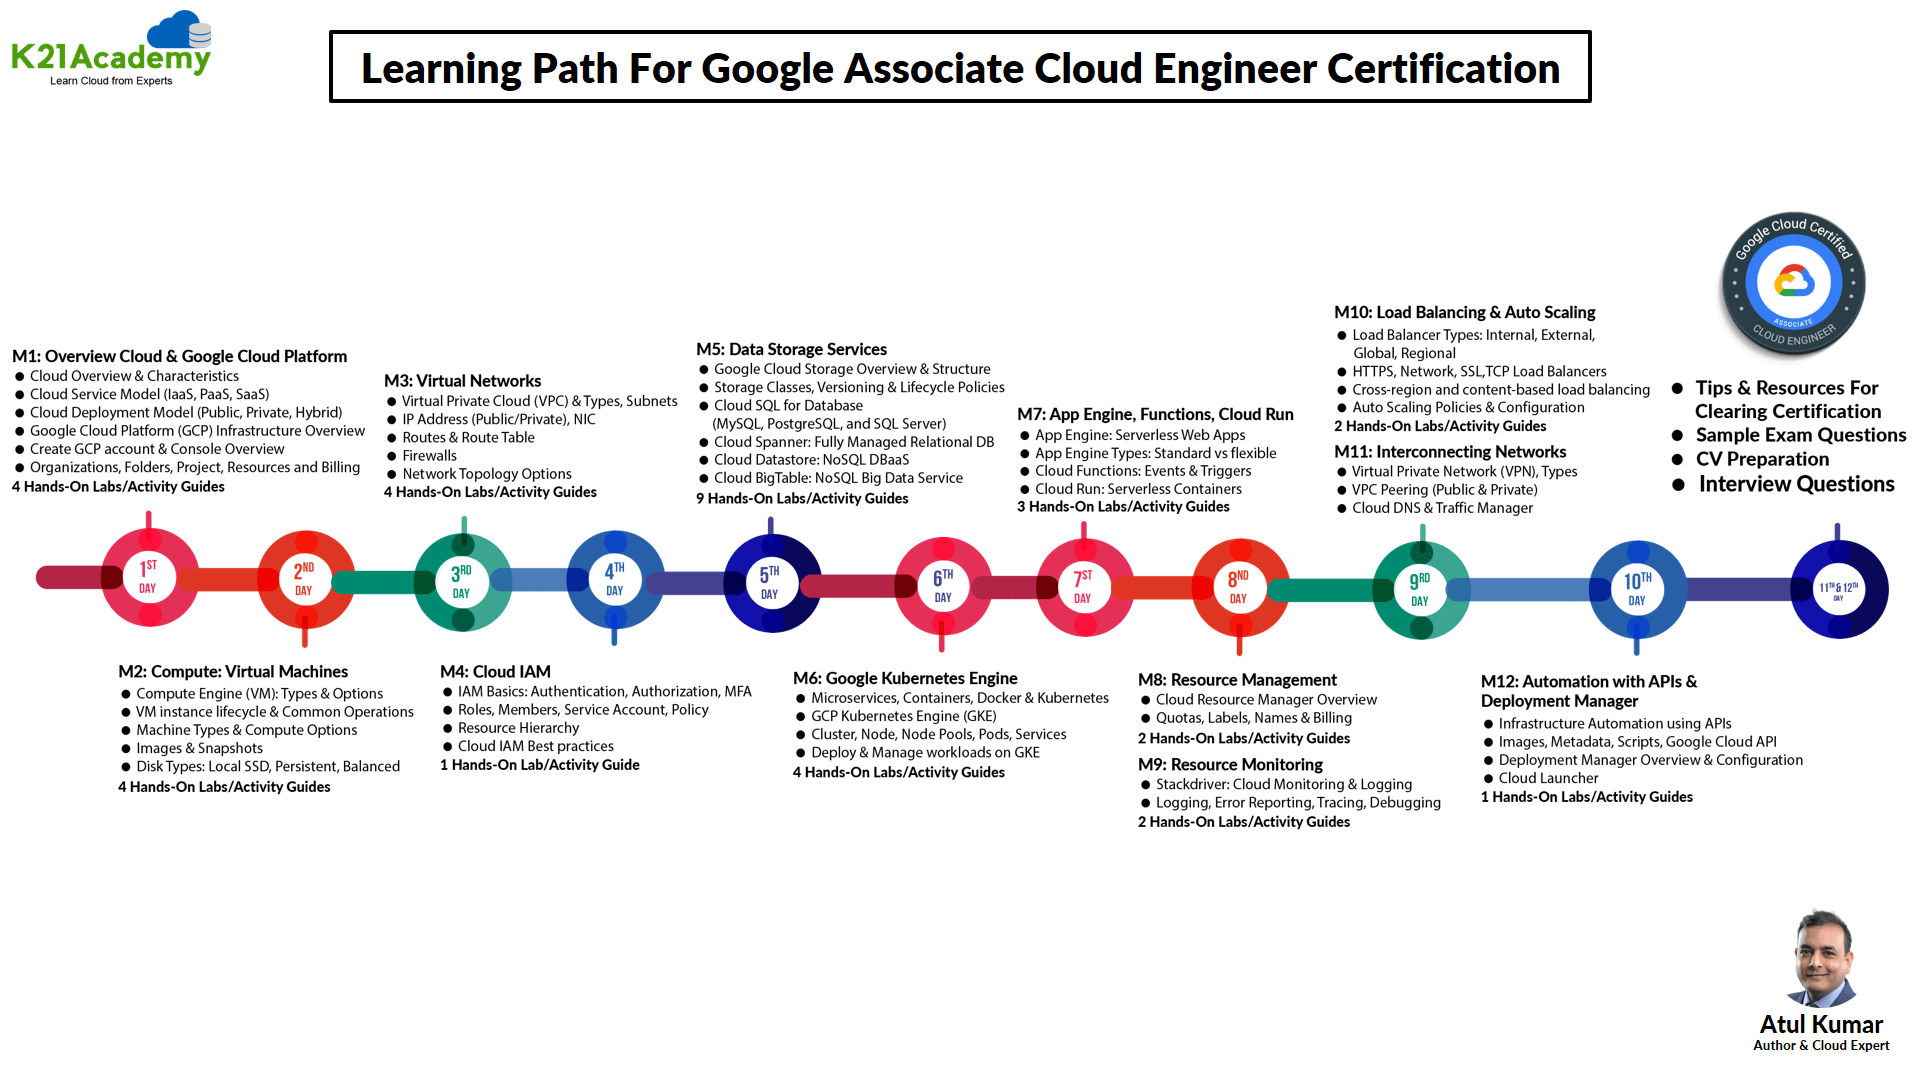 Google Associate Cloud Engineer Certification Path